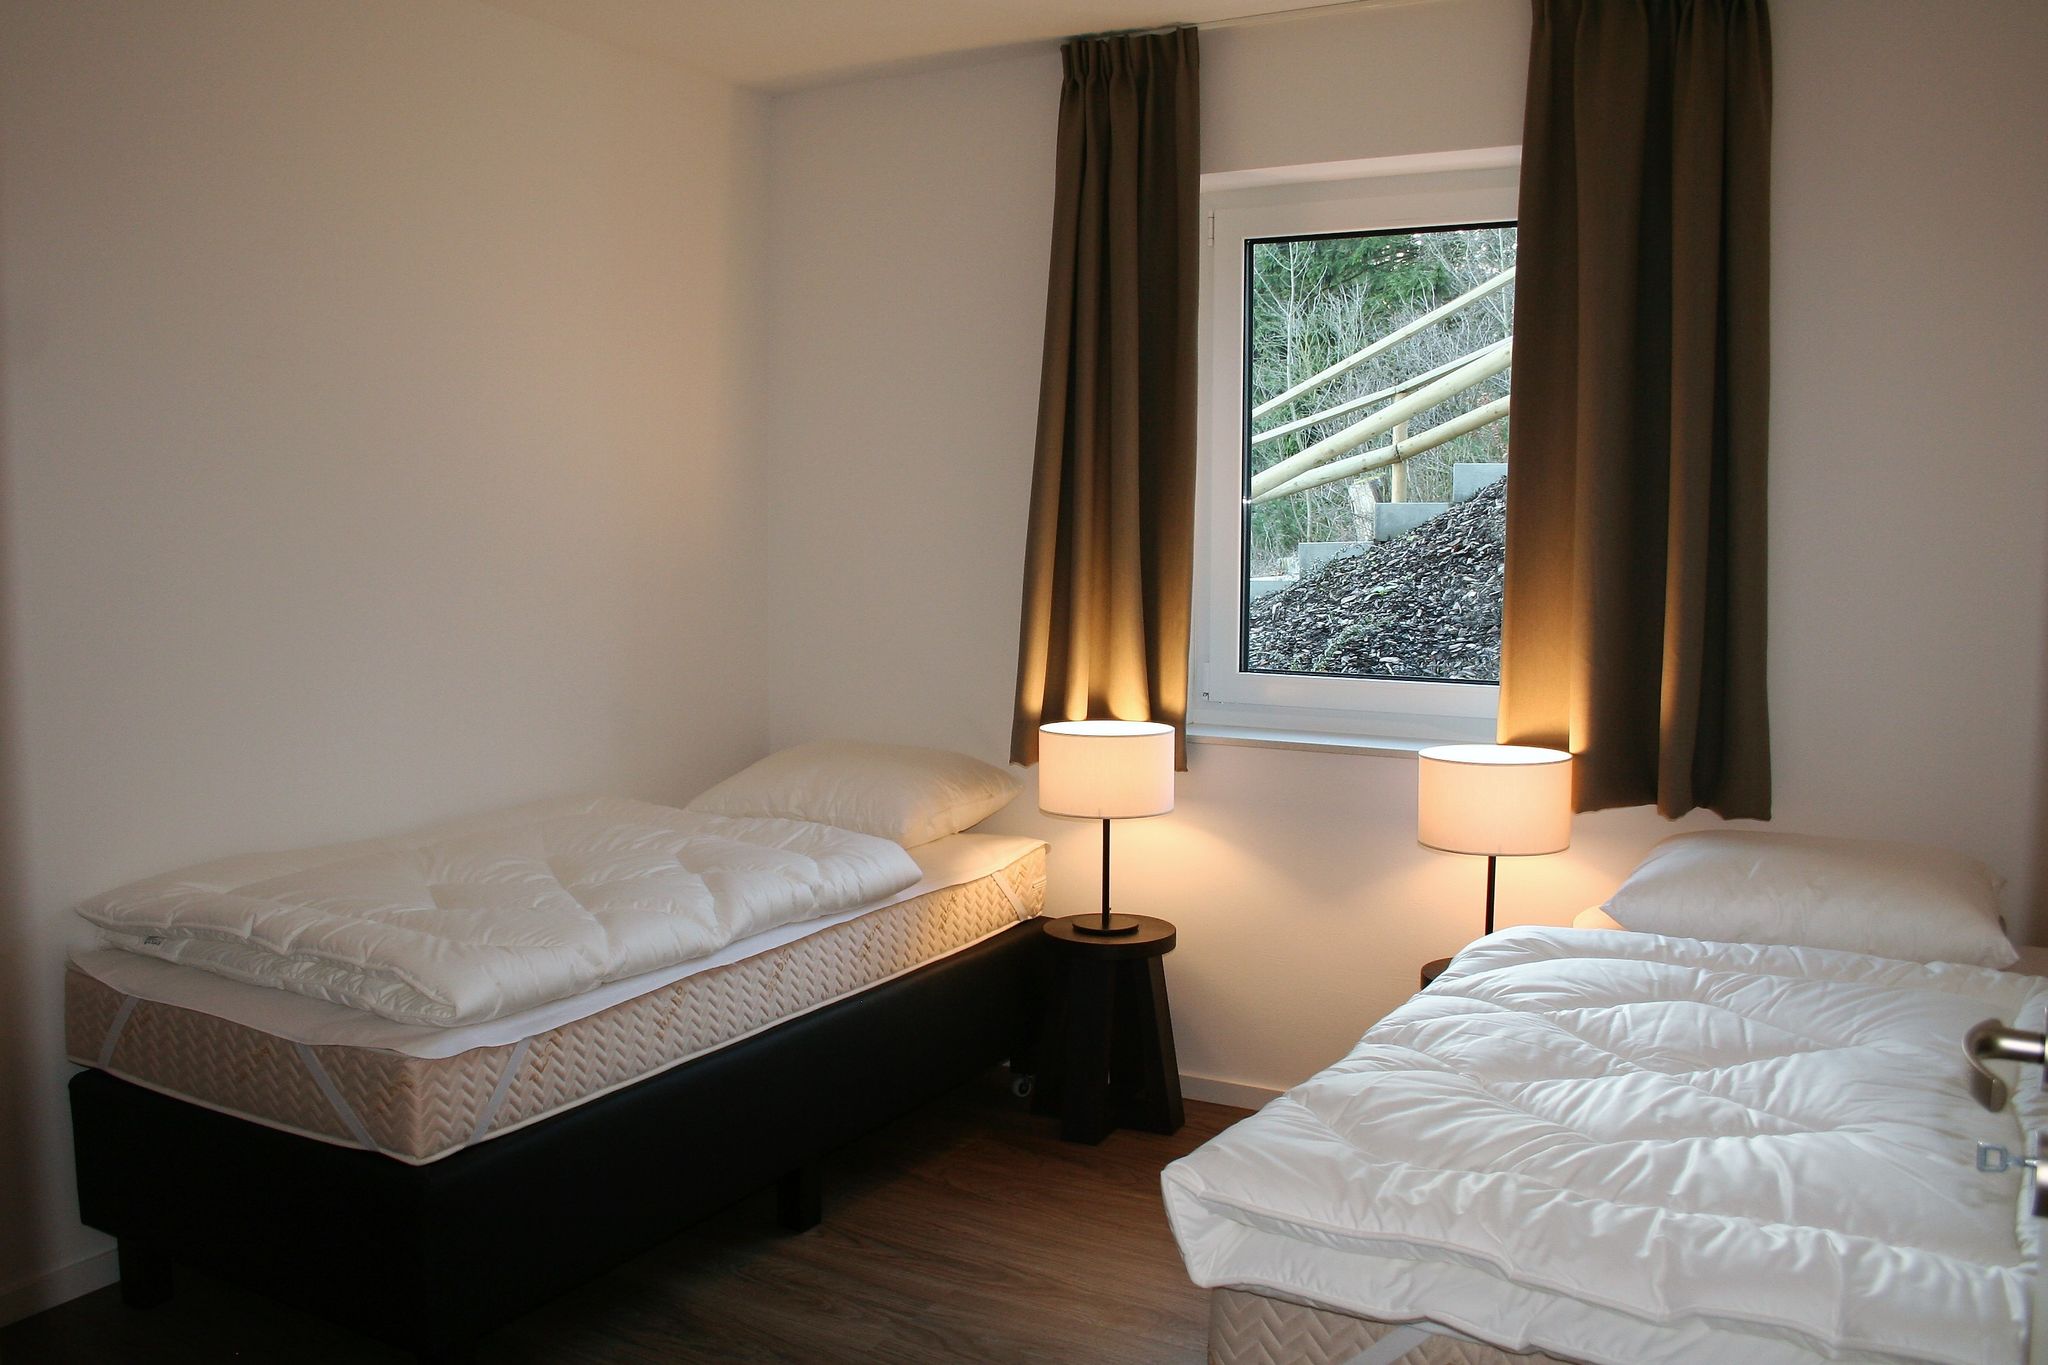 Modern, cozy apartment on the edge of Winterberg